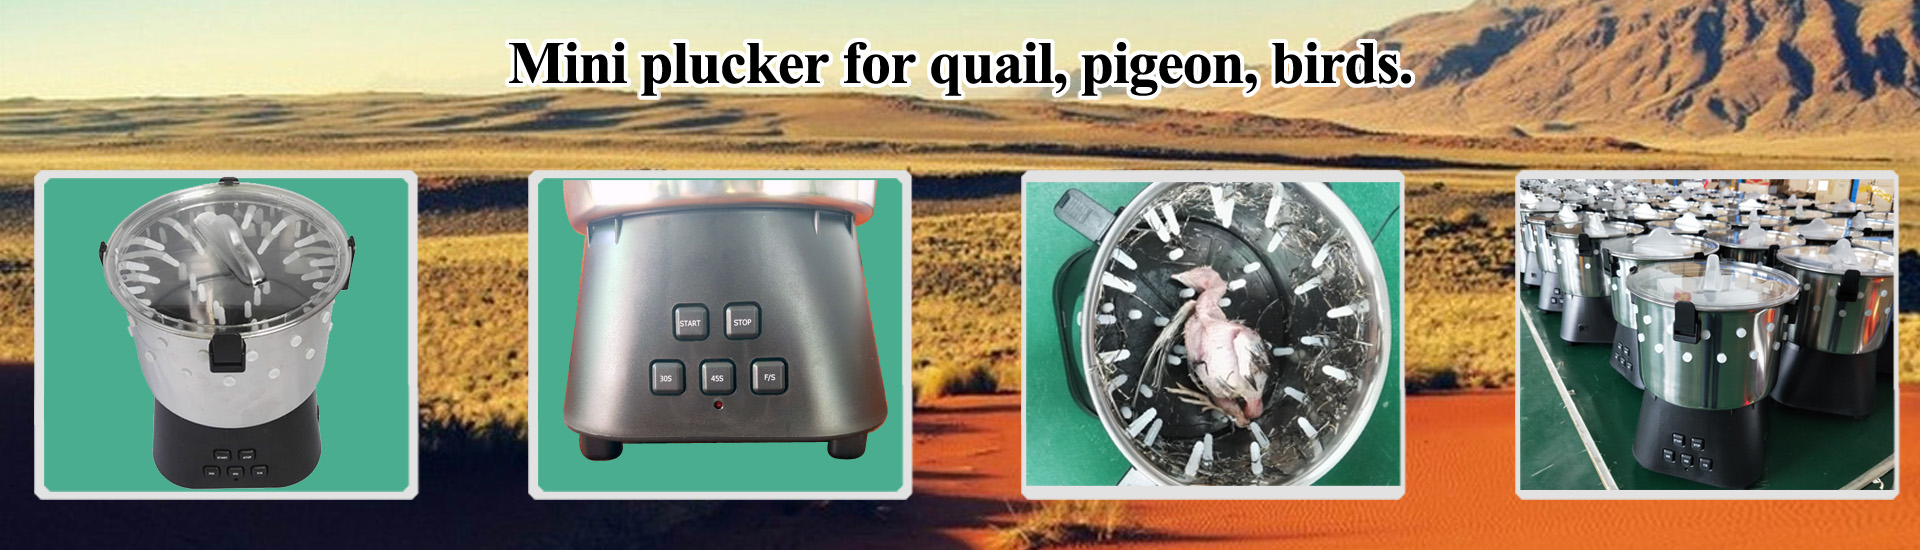 Plucker, birds plucker, quail plucker